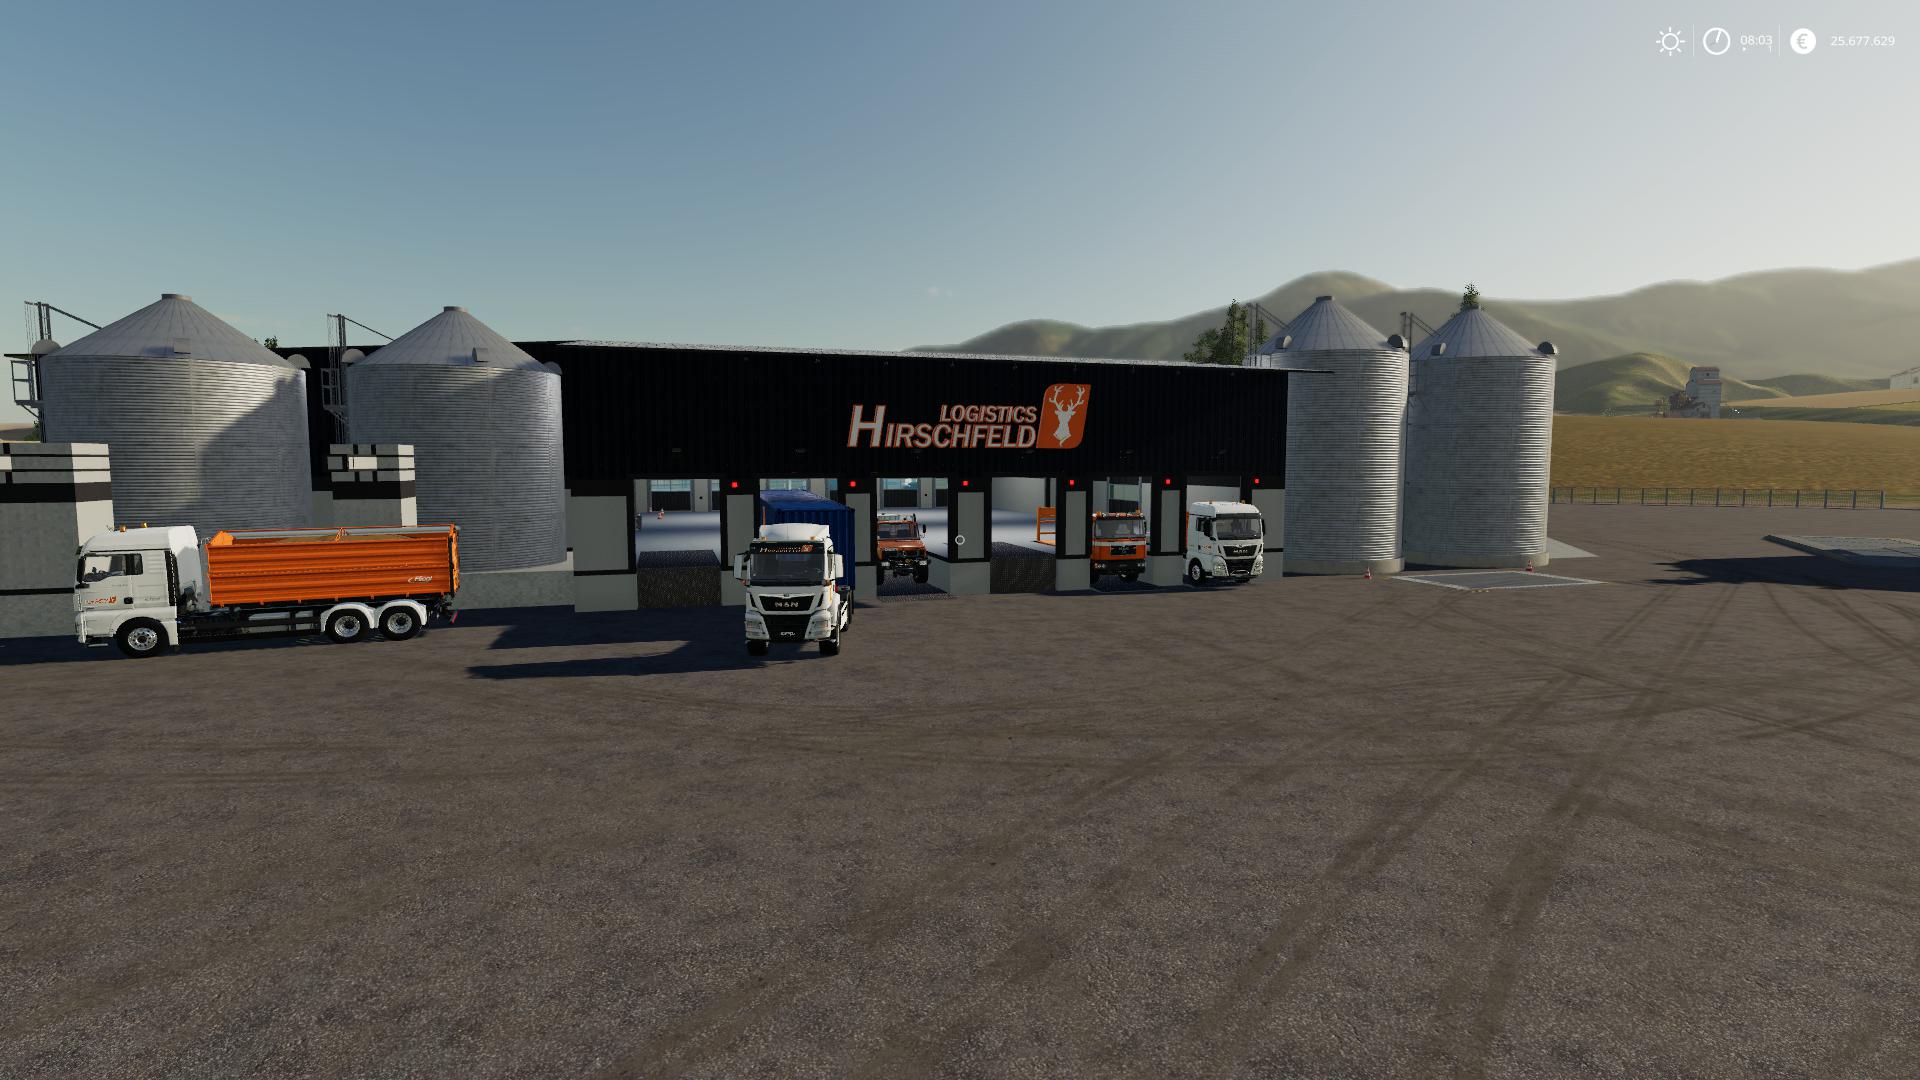 Moд Hirschfeld Logistics Globalmarket V1000 для Farming Simulator 2019 Fs 19 Здания и 6924